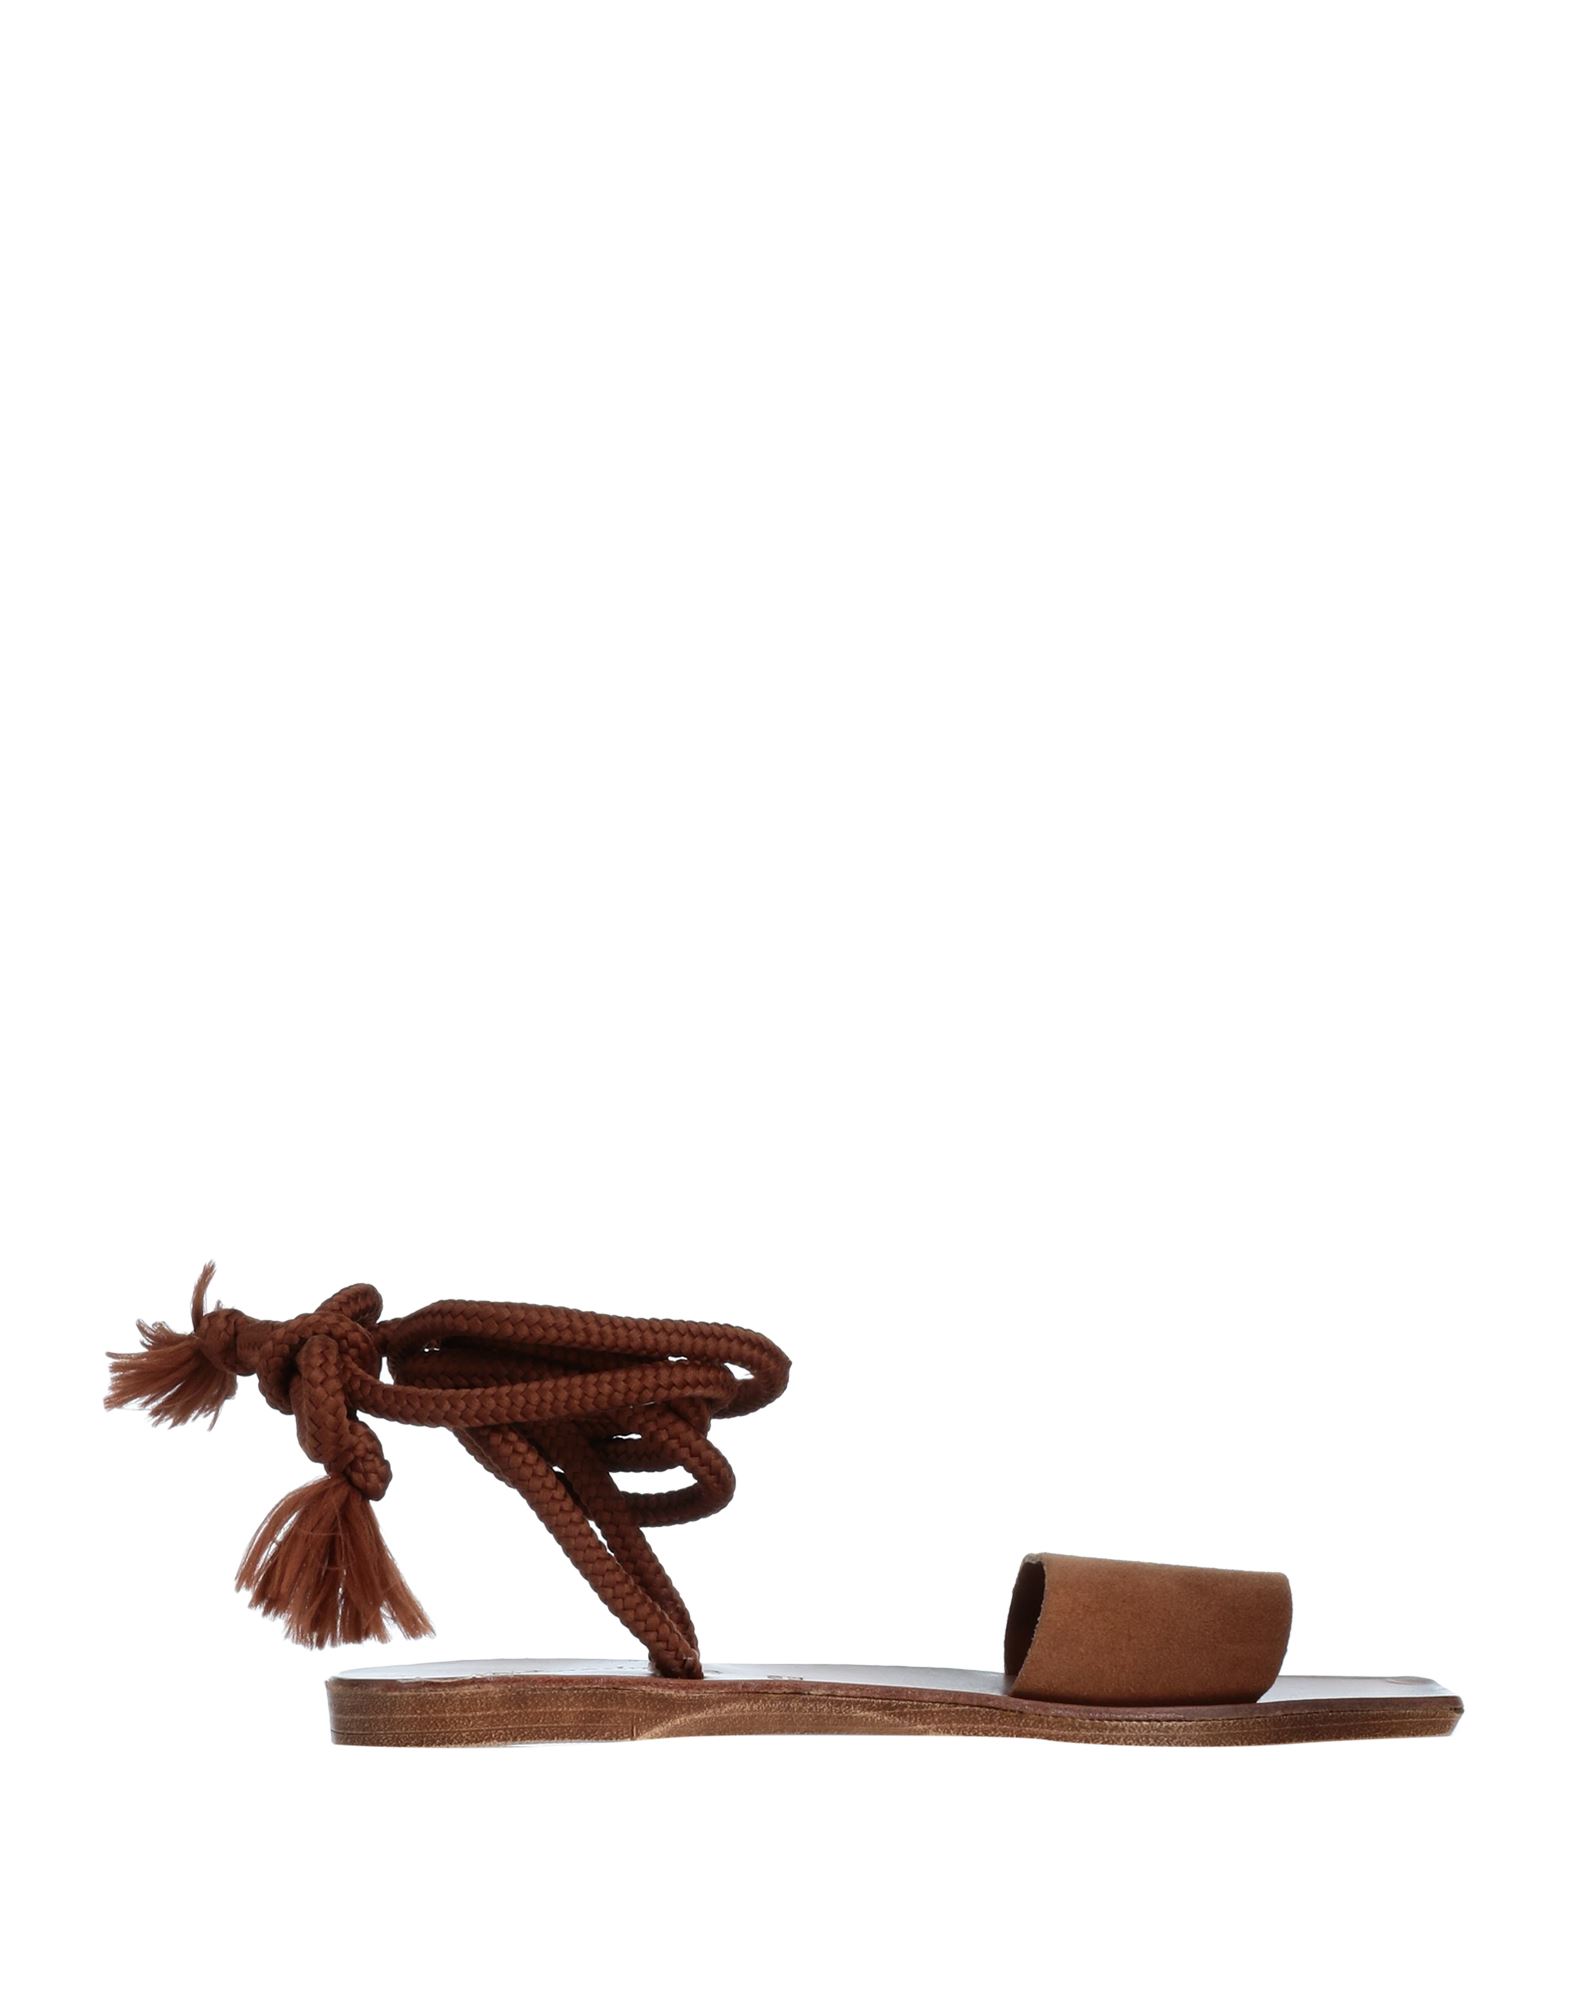 Primadonna Sandals In Brown